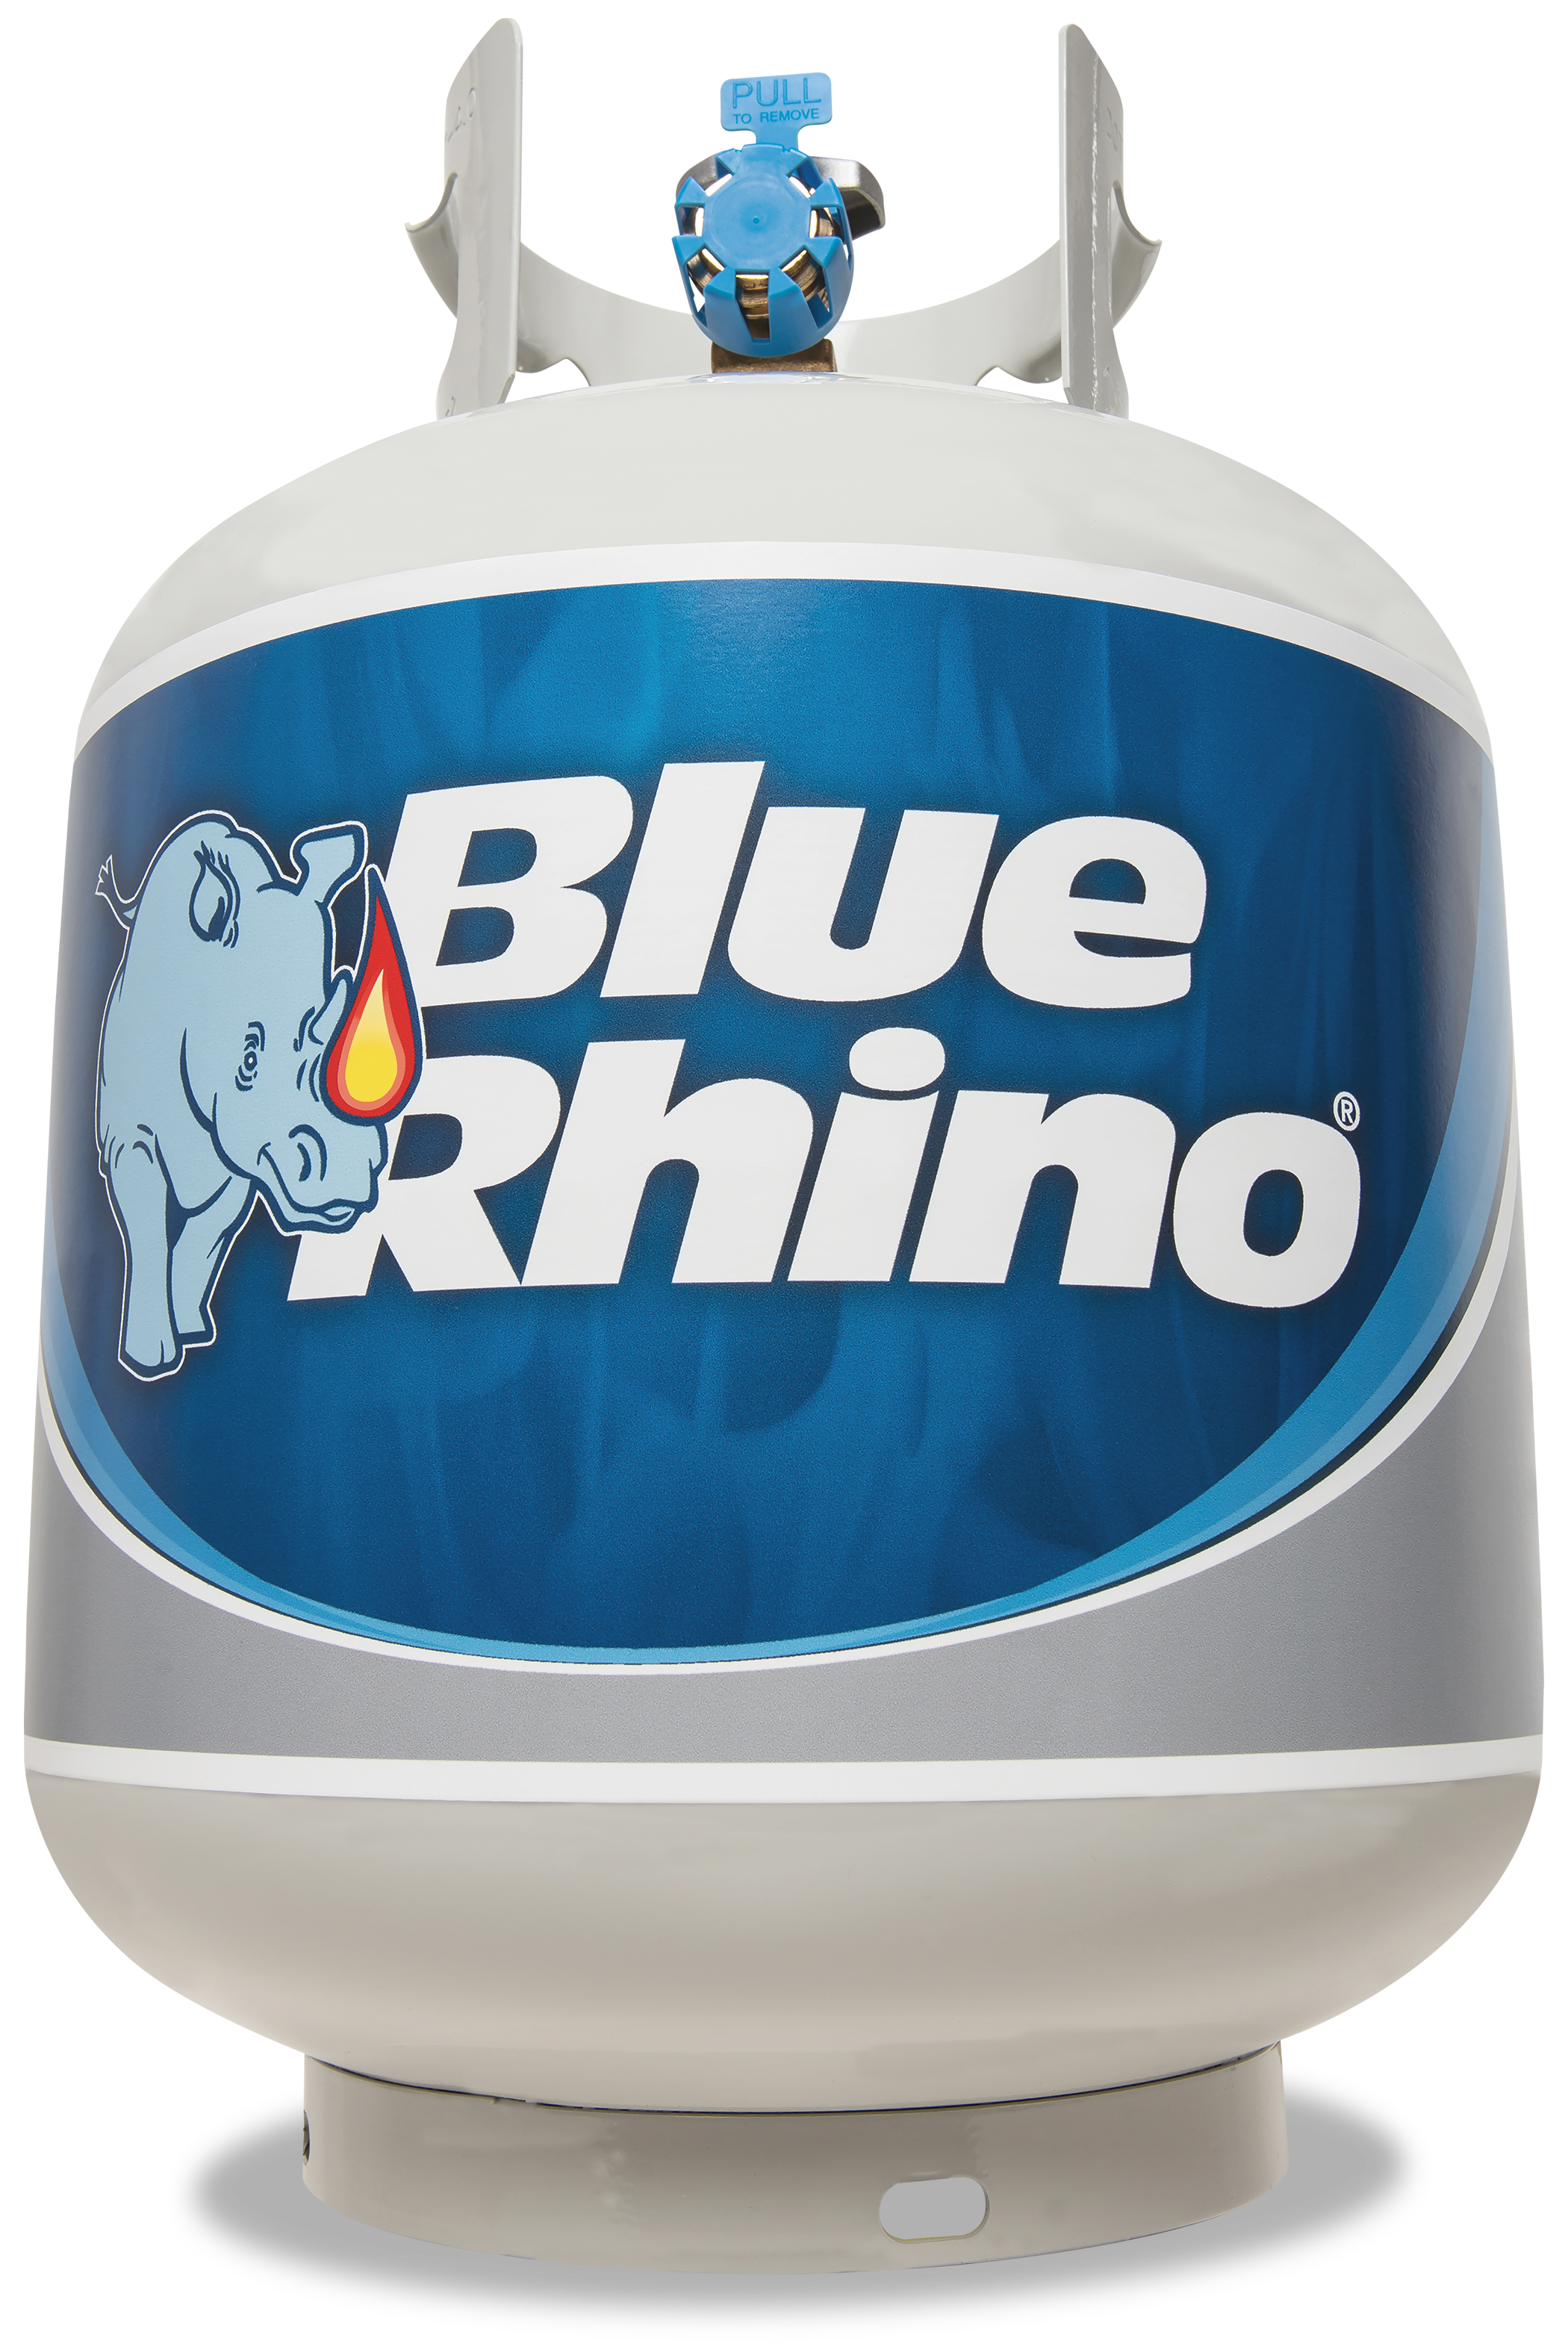 Blue Rhino Propane Exchange - image 3 of 11